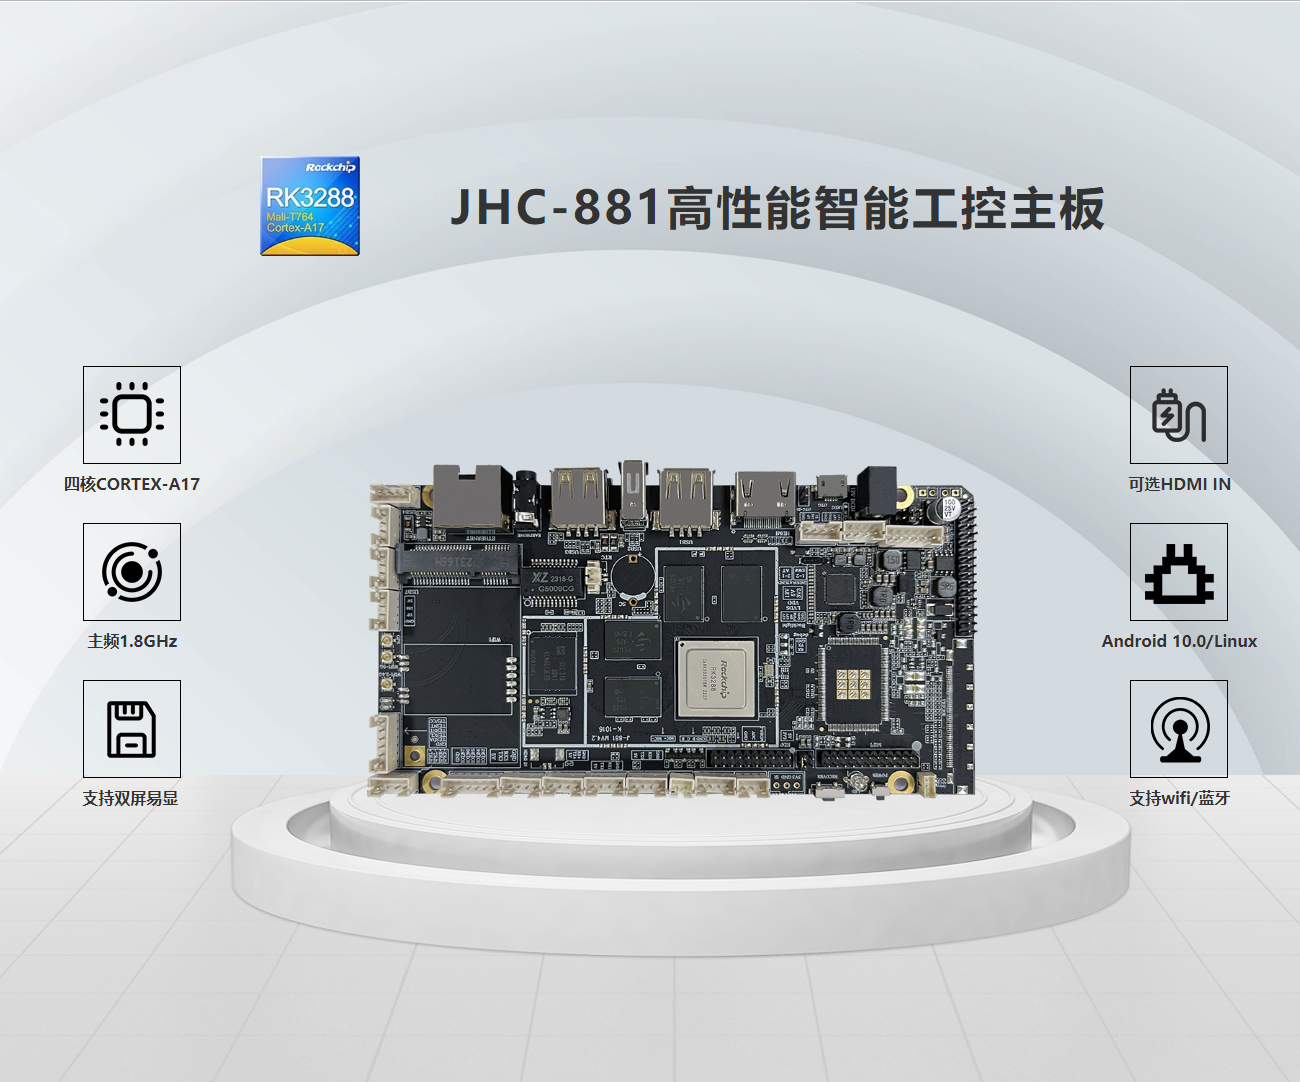 JHC-881高性能智能工控主板